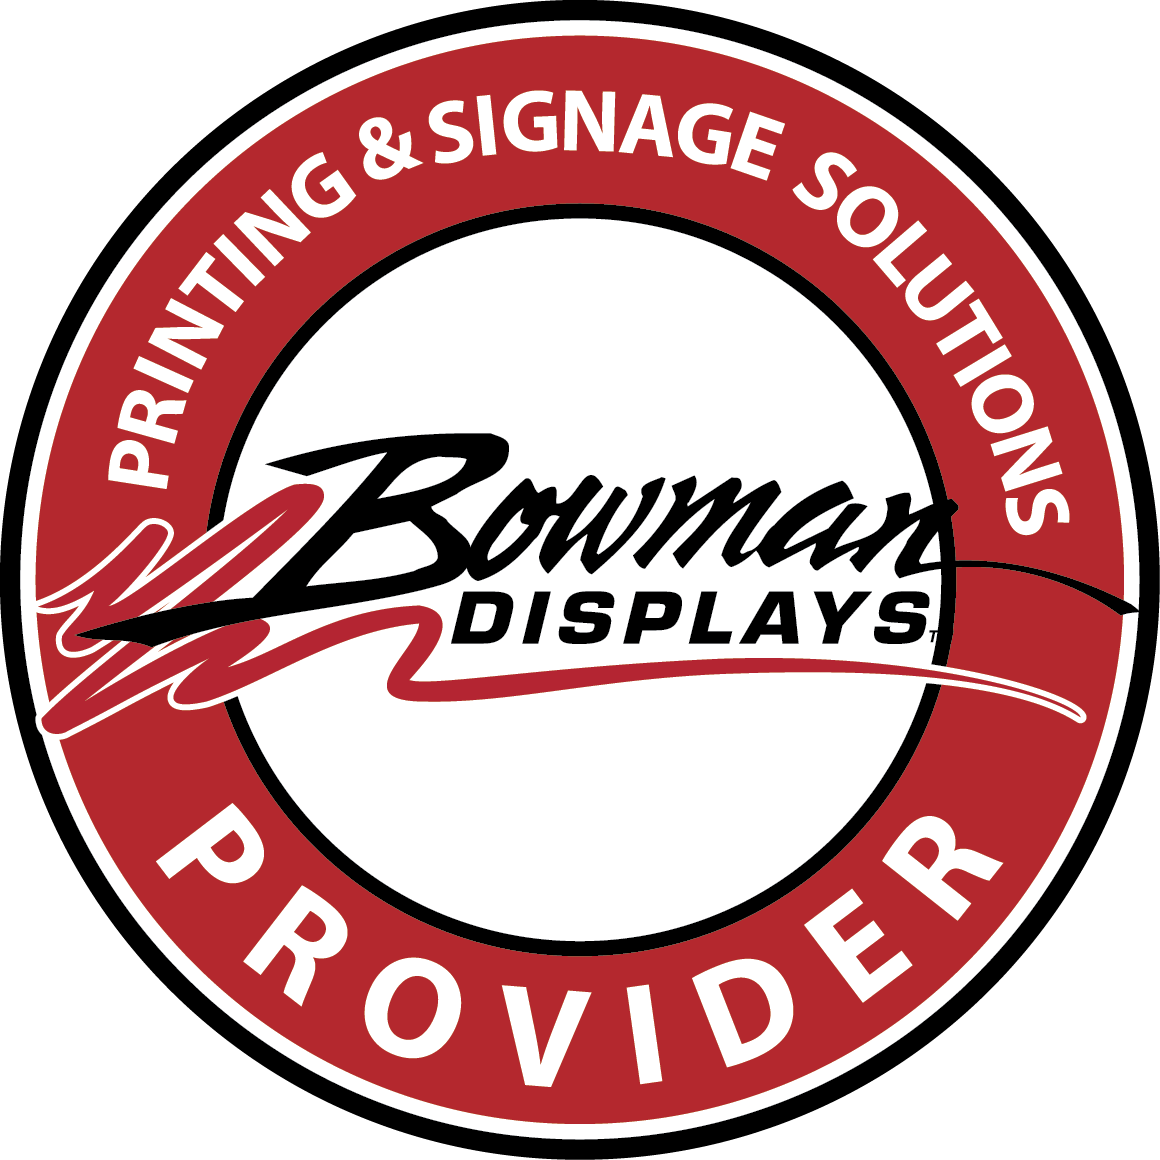 Red Bowman Logo - Bowman Displays